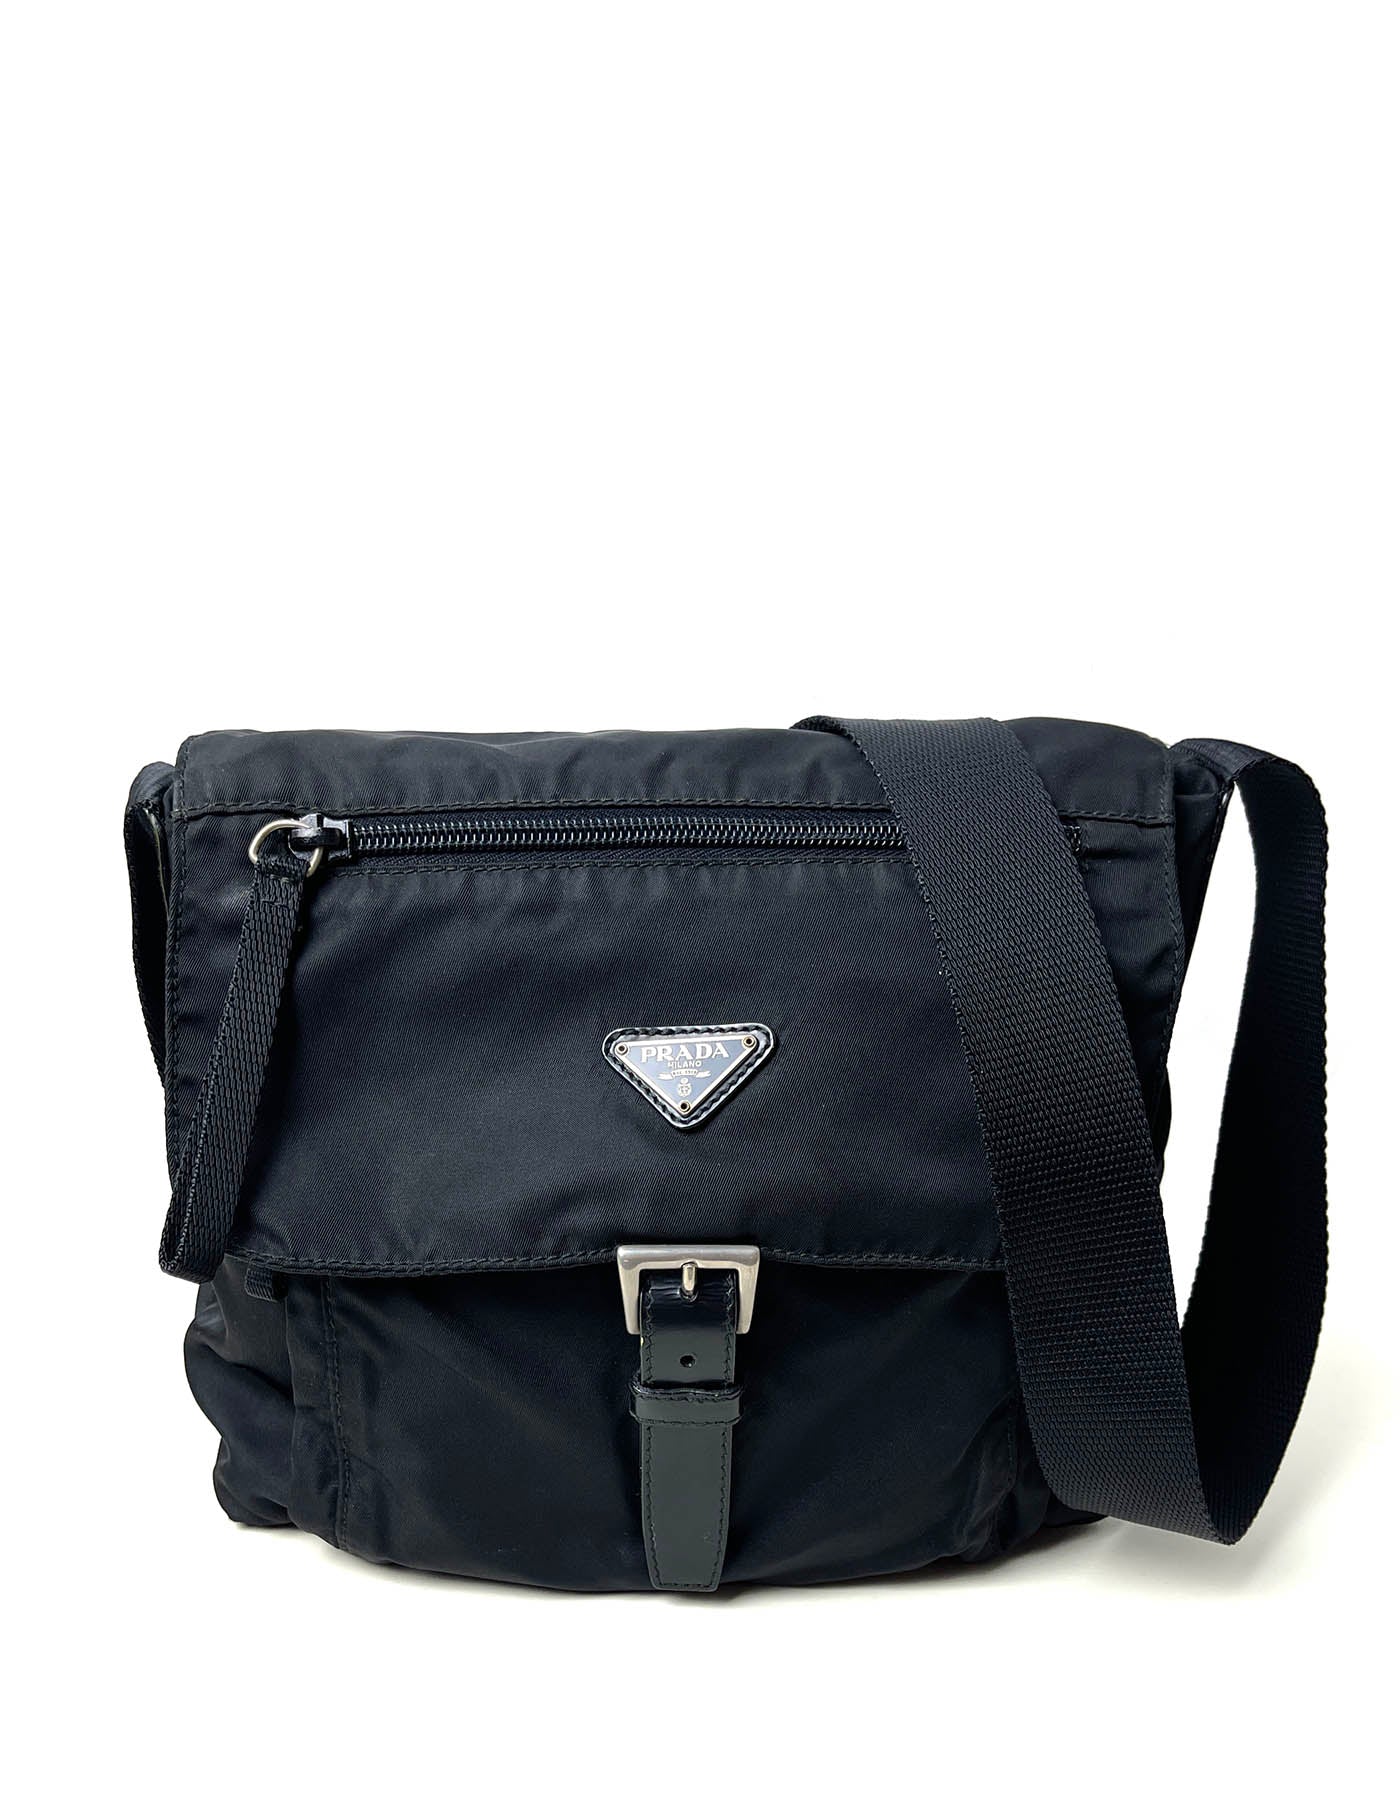 Prada Black Tessuto Nylon Flap Messenger Bag